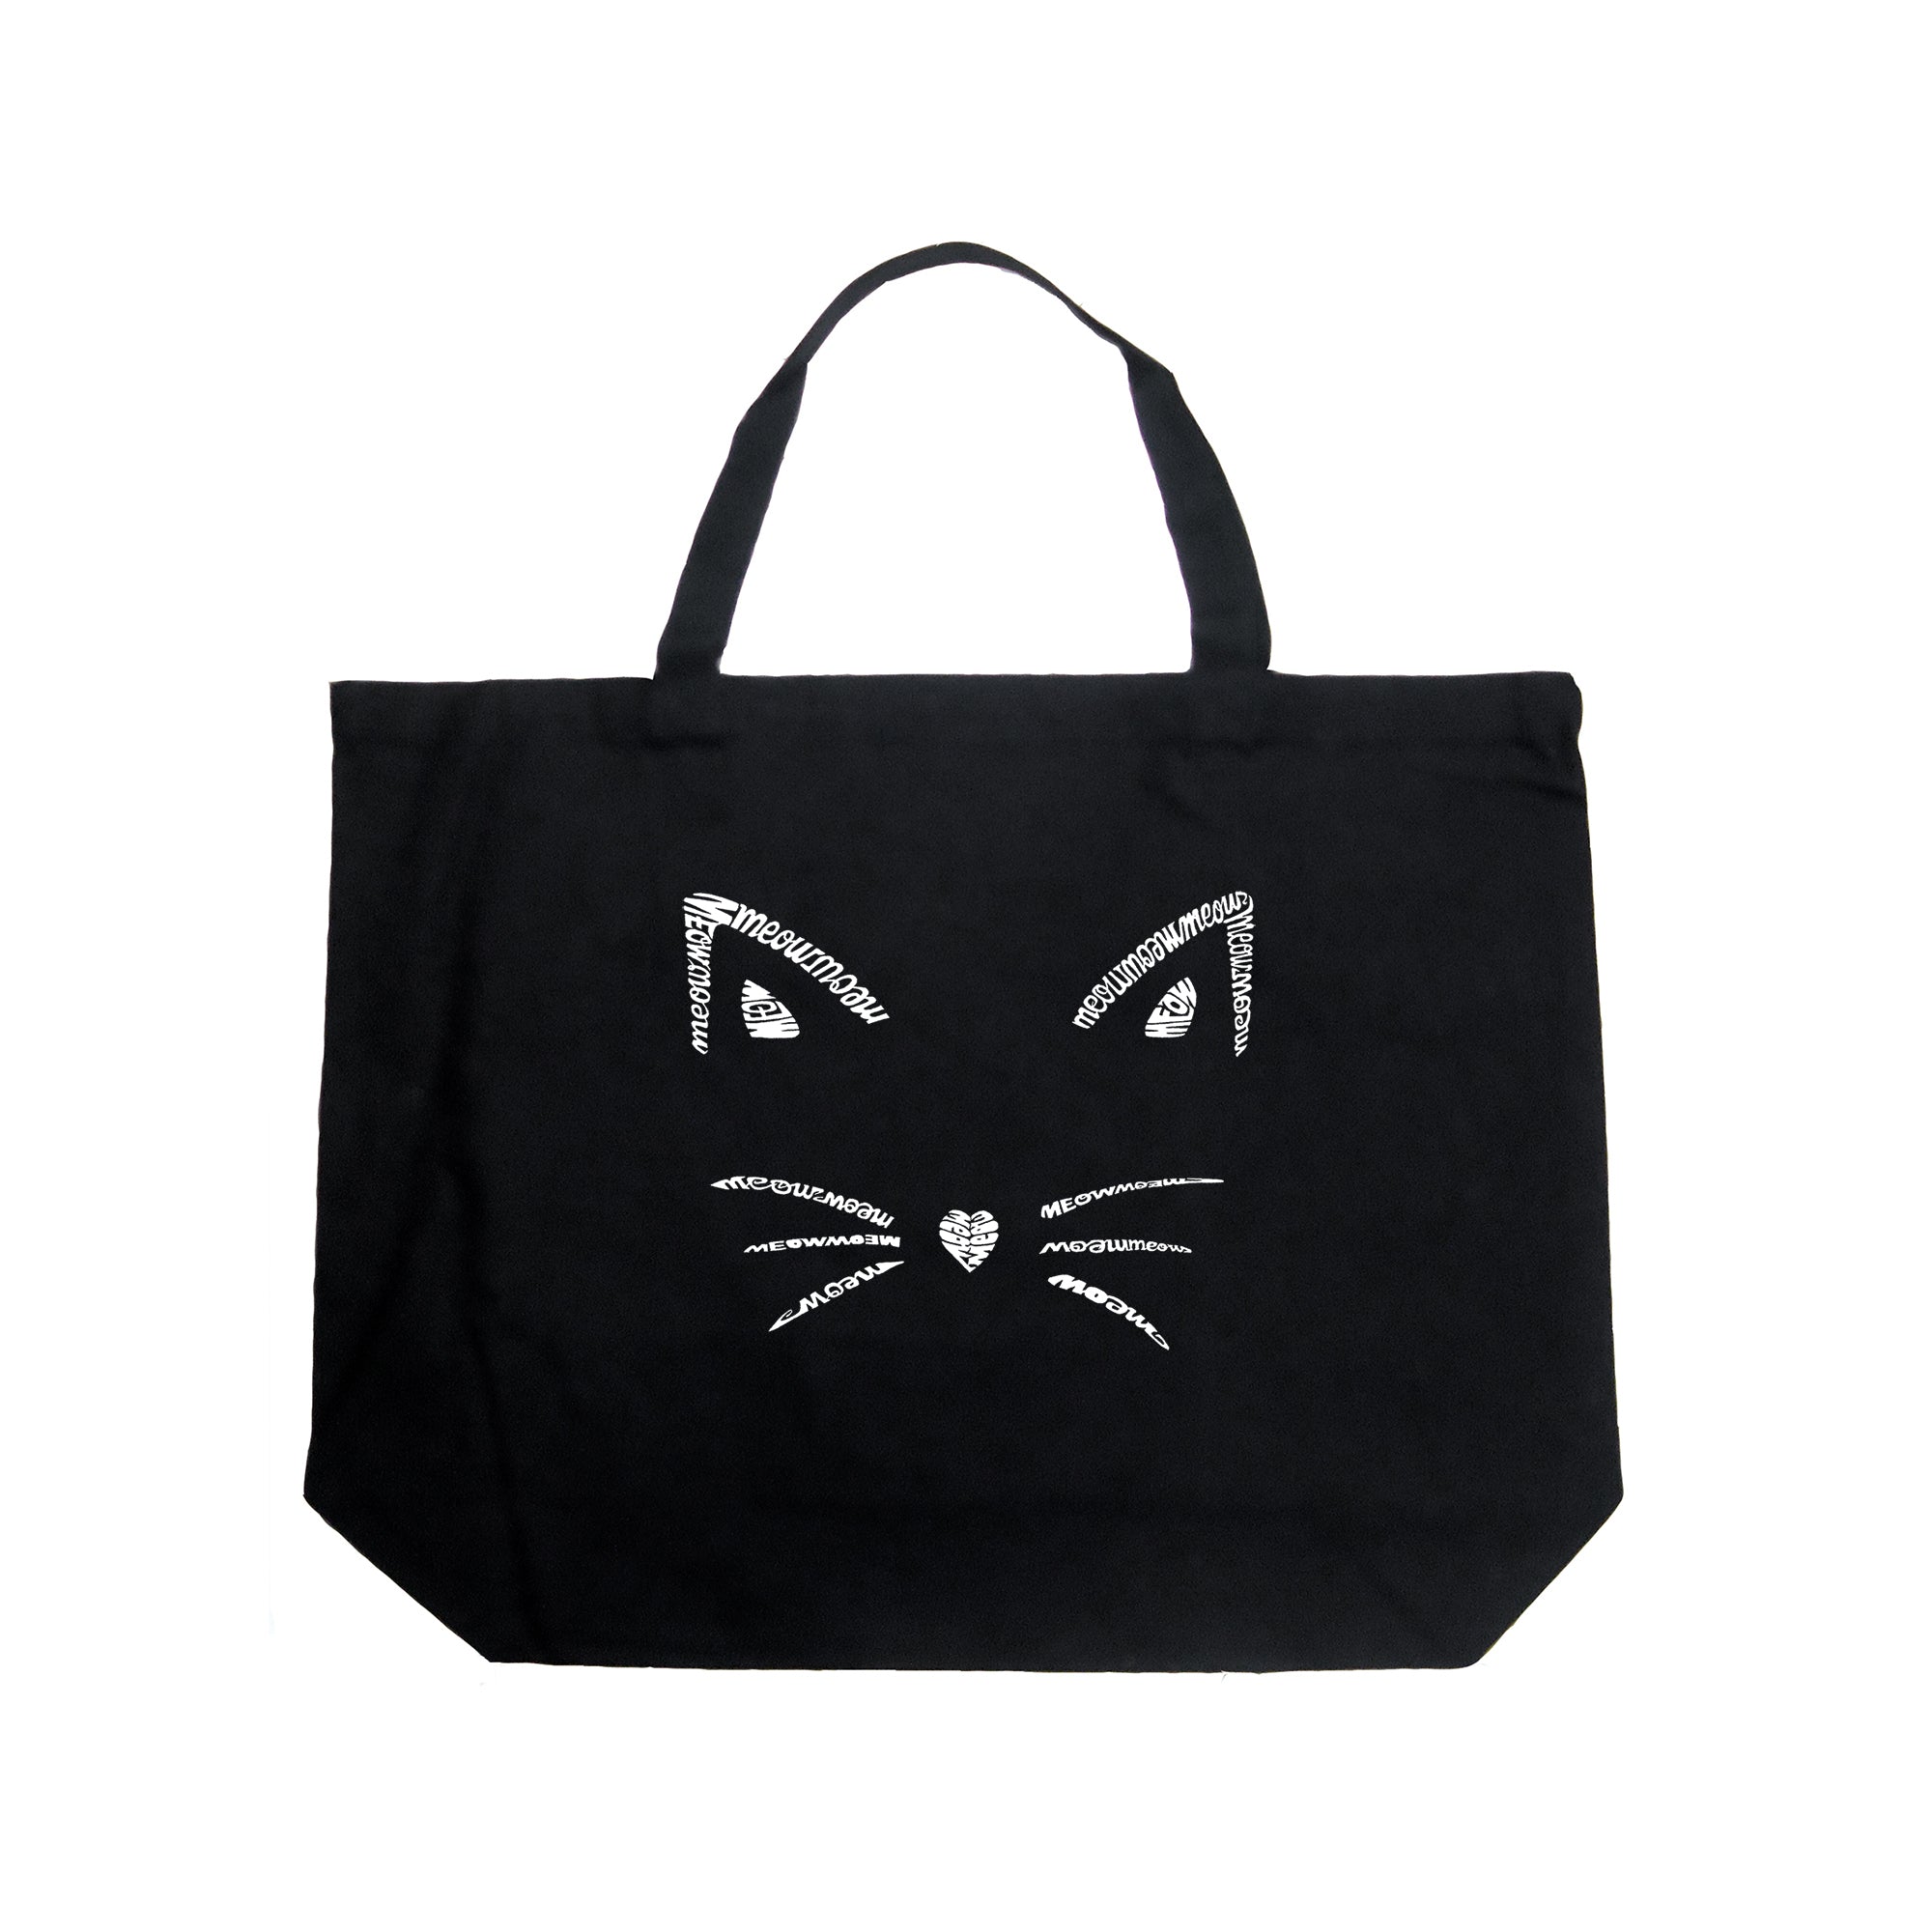 Whiskers - Large Word Art Tote Bag - Black - Large